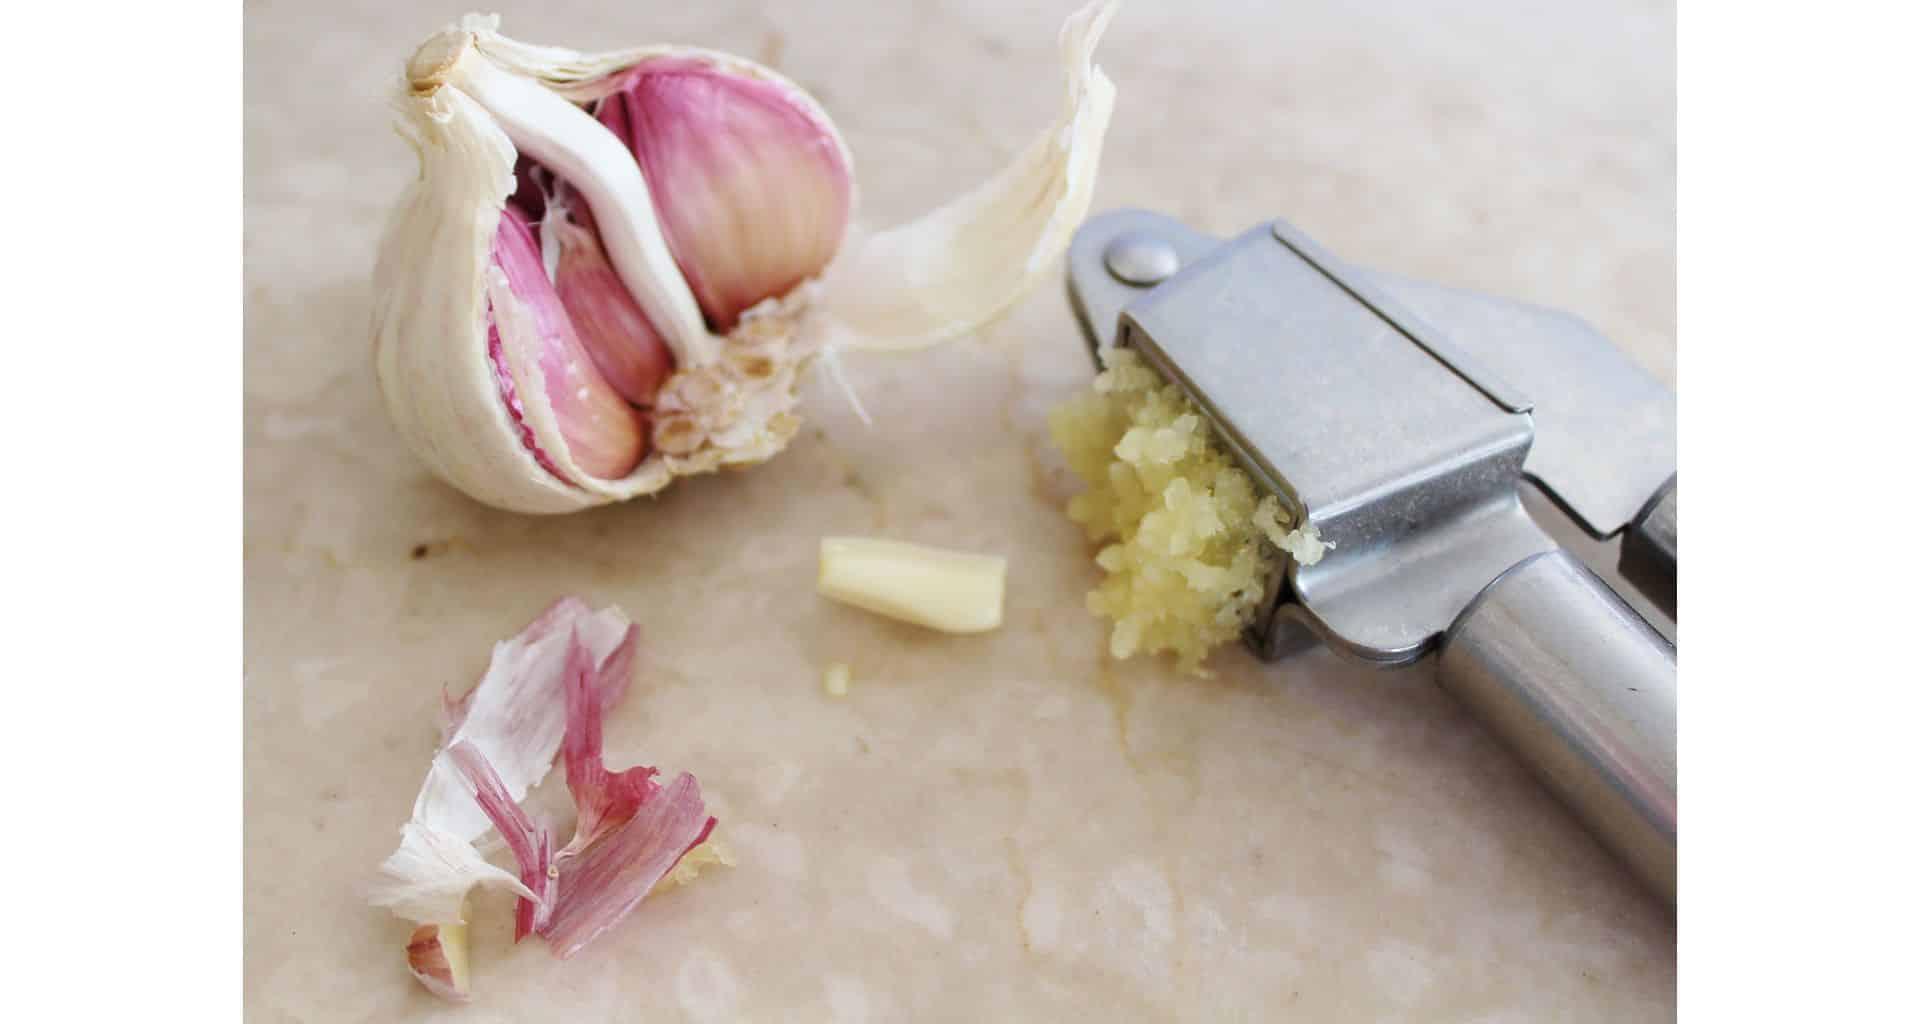 Garlic contains large amounts of polysaccharides